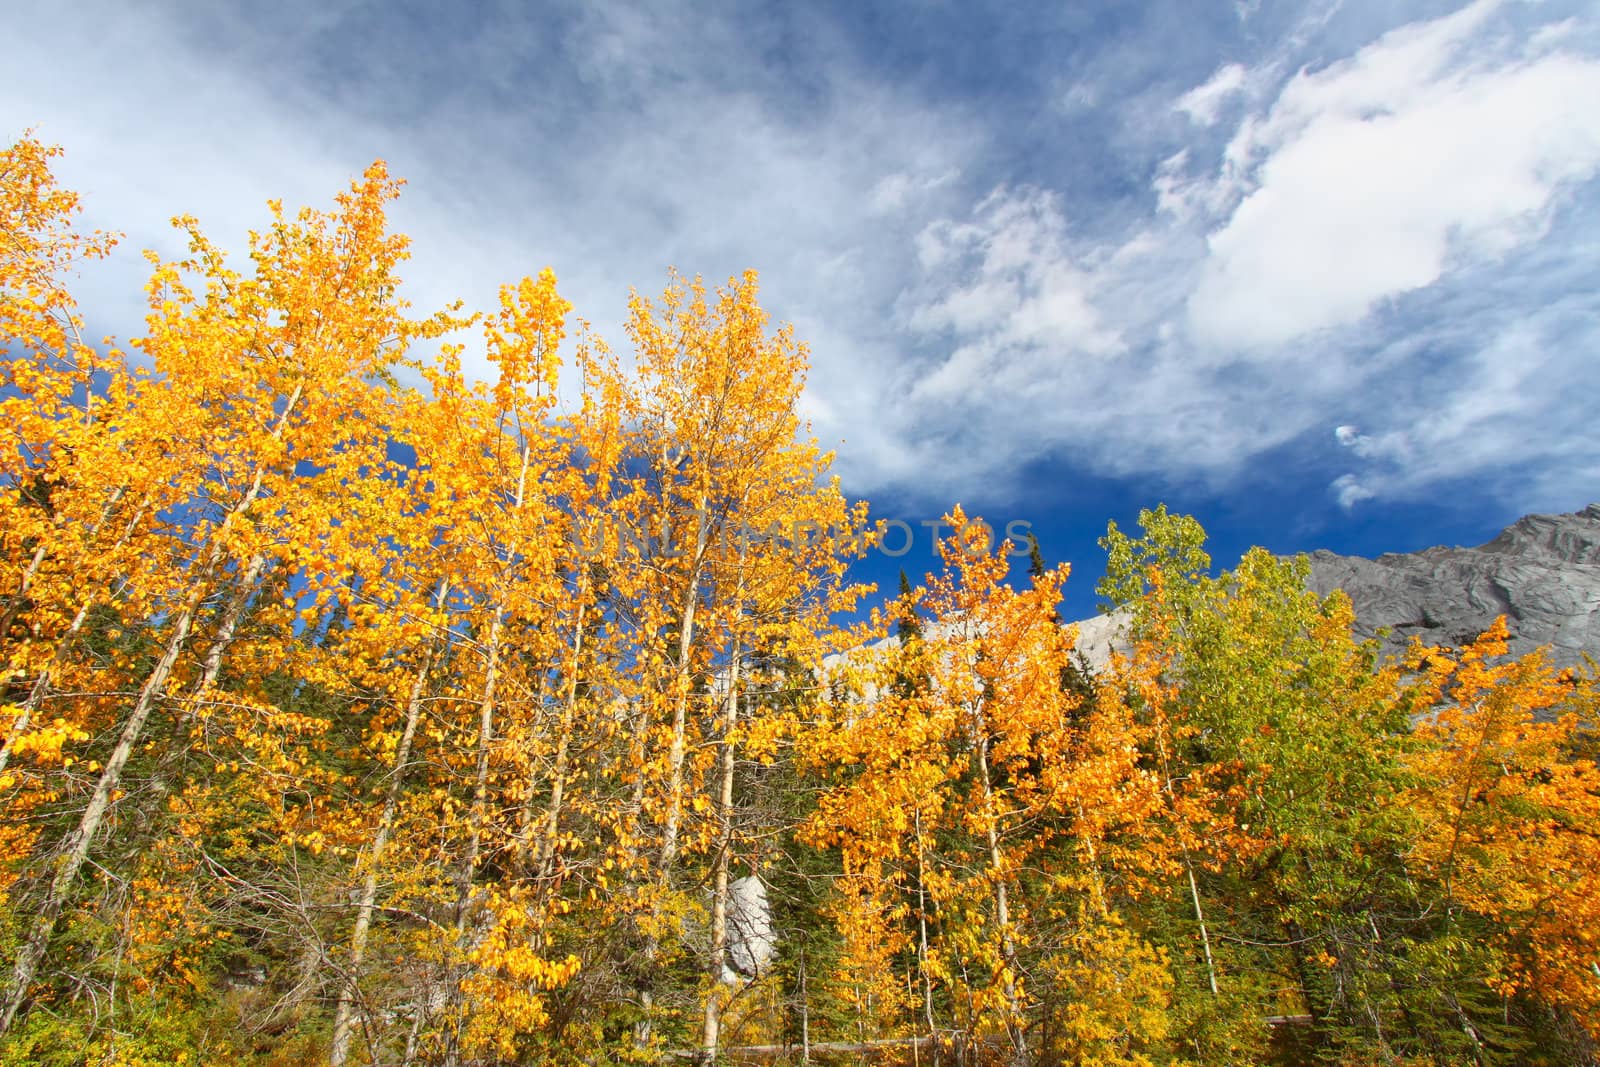 Autumn colors below blue skies in the Canadian Rockies.